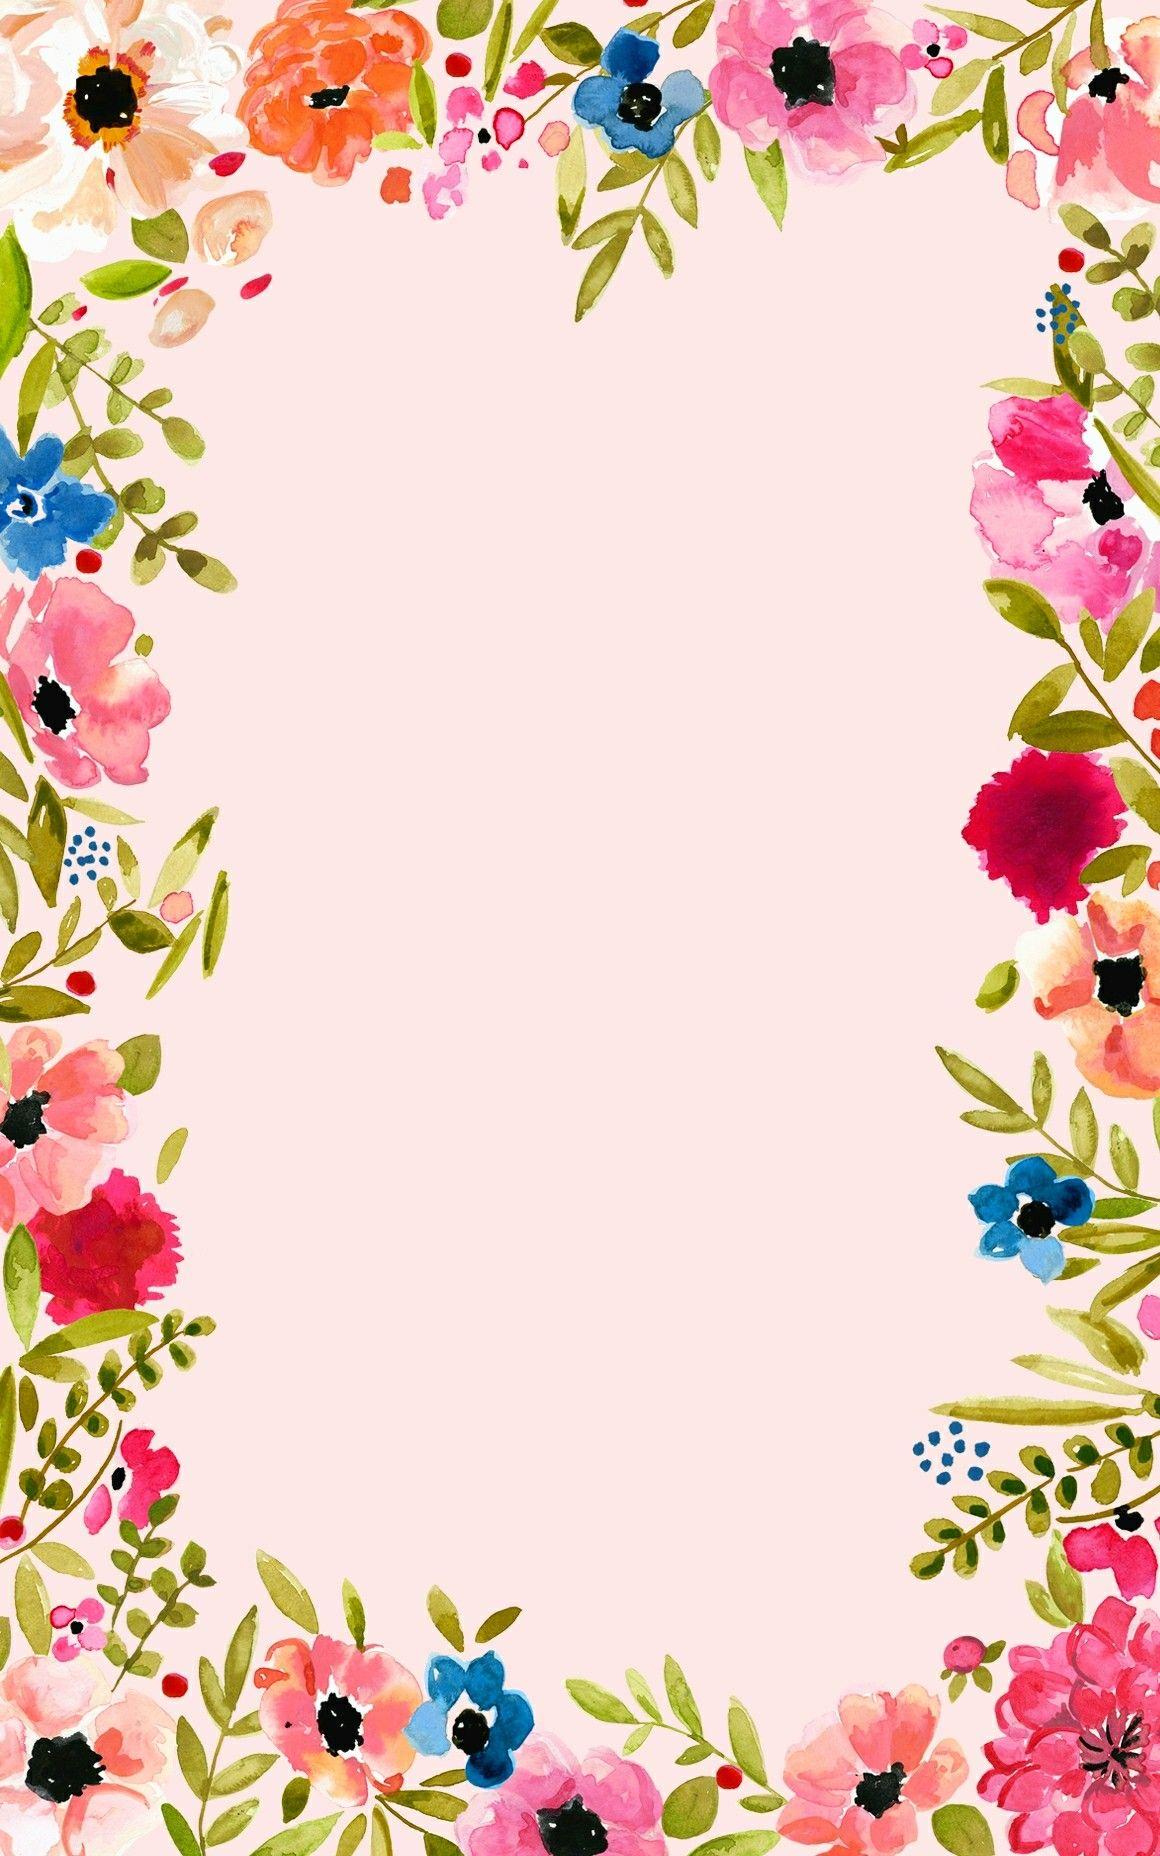 Flower Border Wallpapers - Top Free Flower Border Backgrounds ...